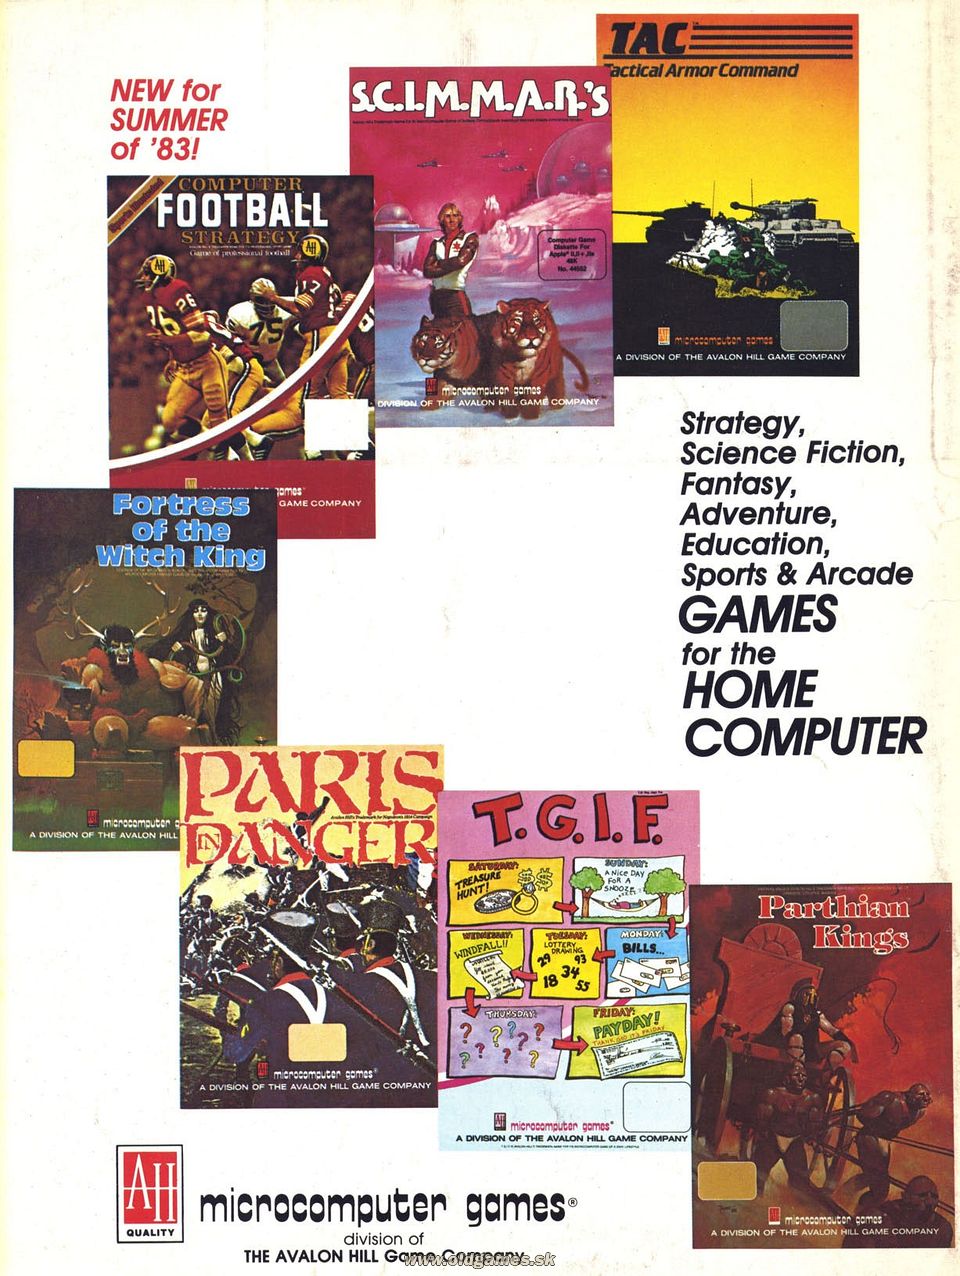 microcomputer games